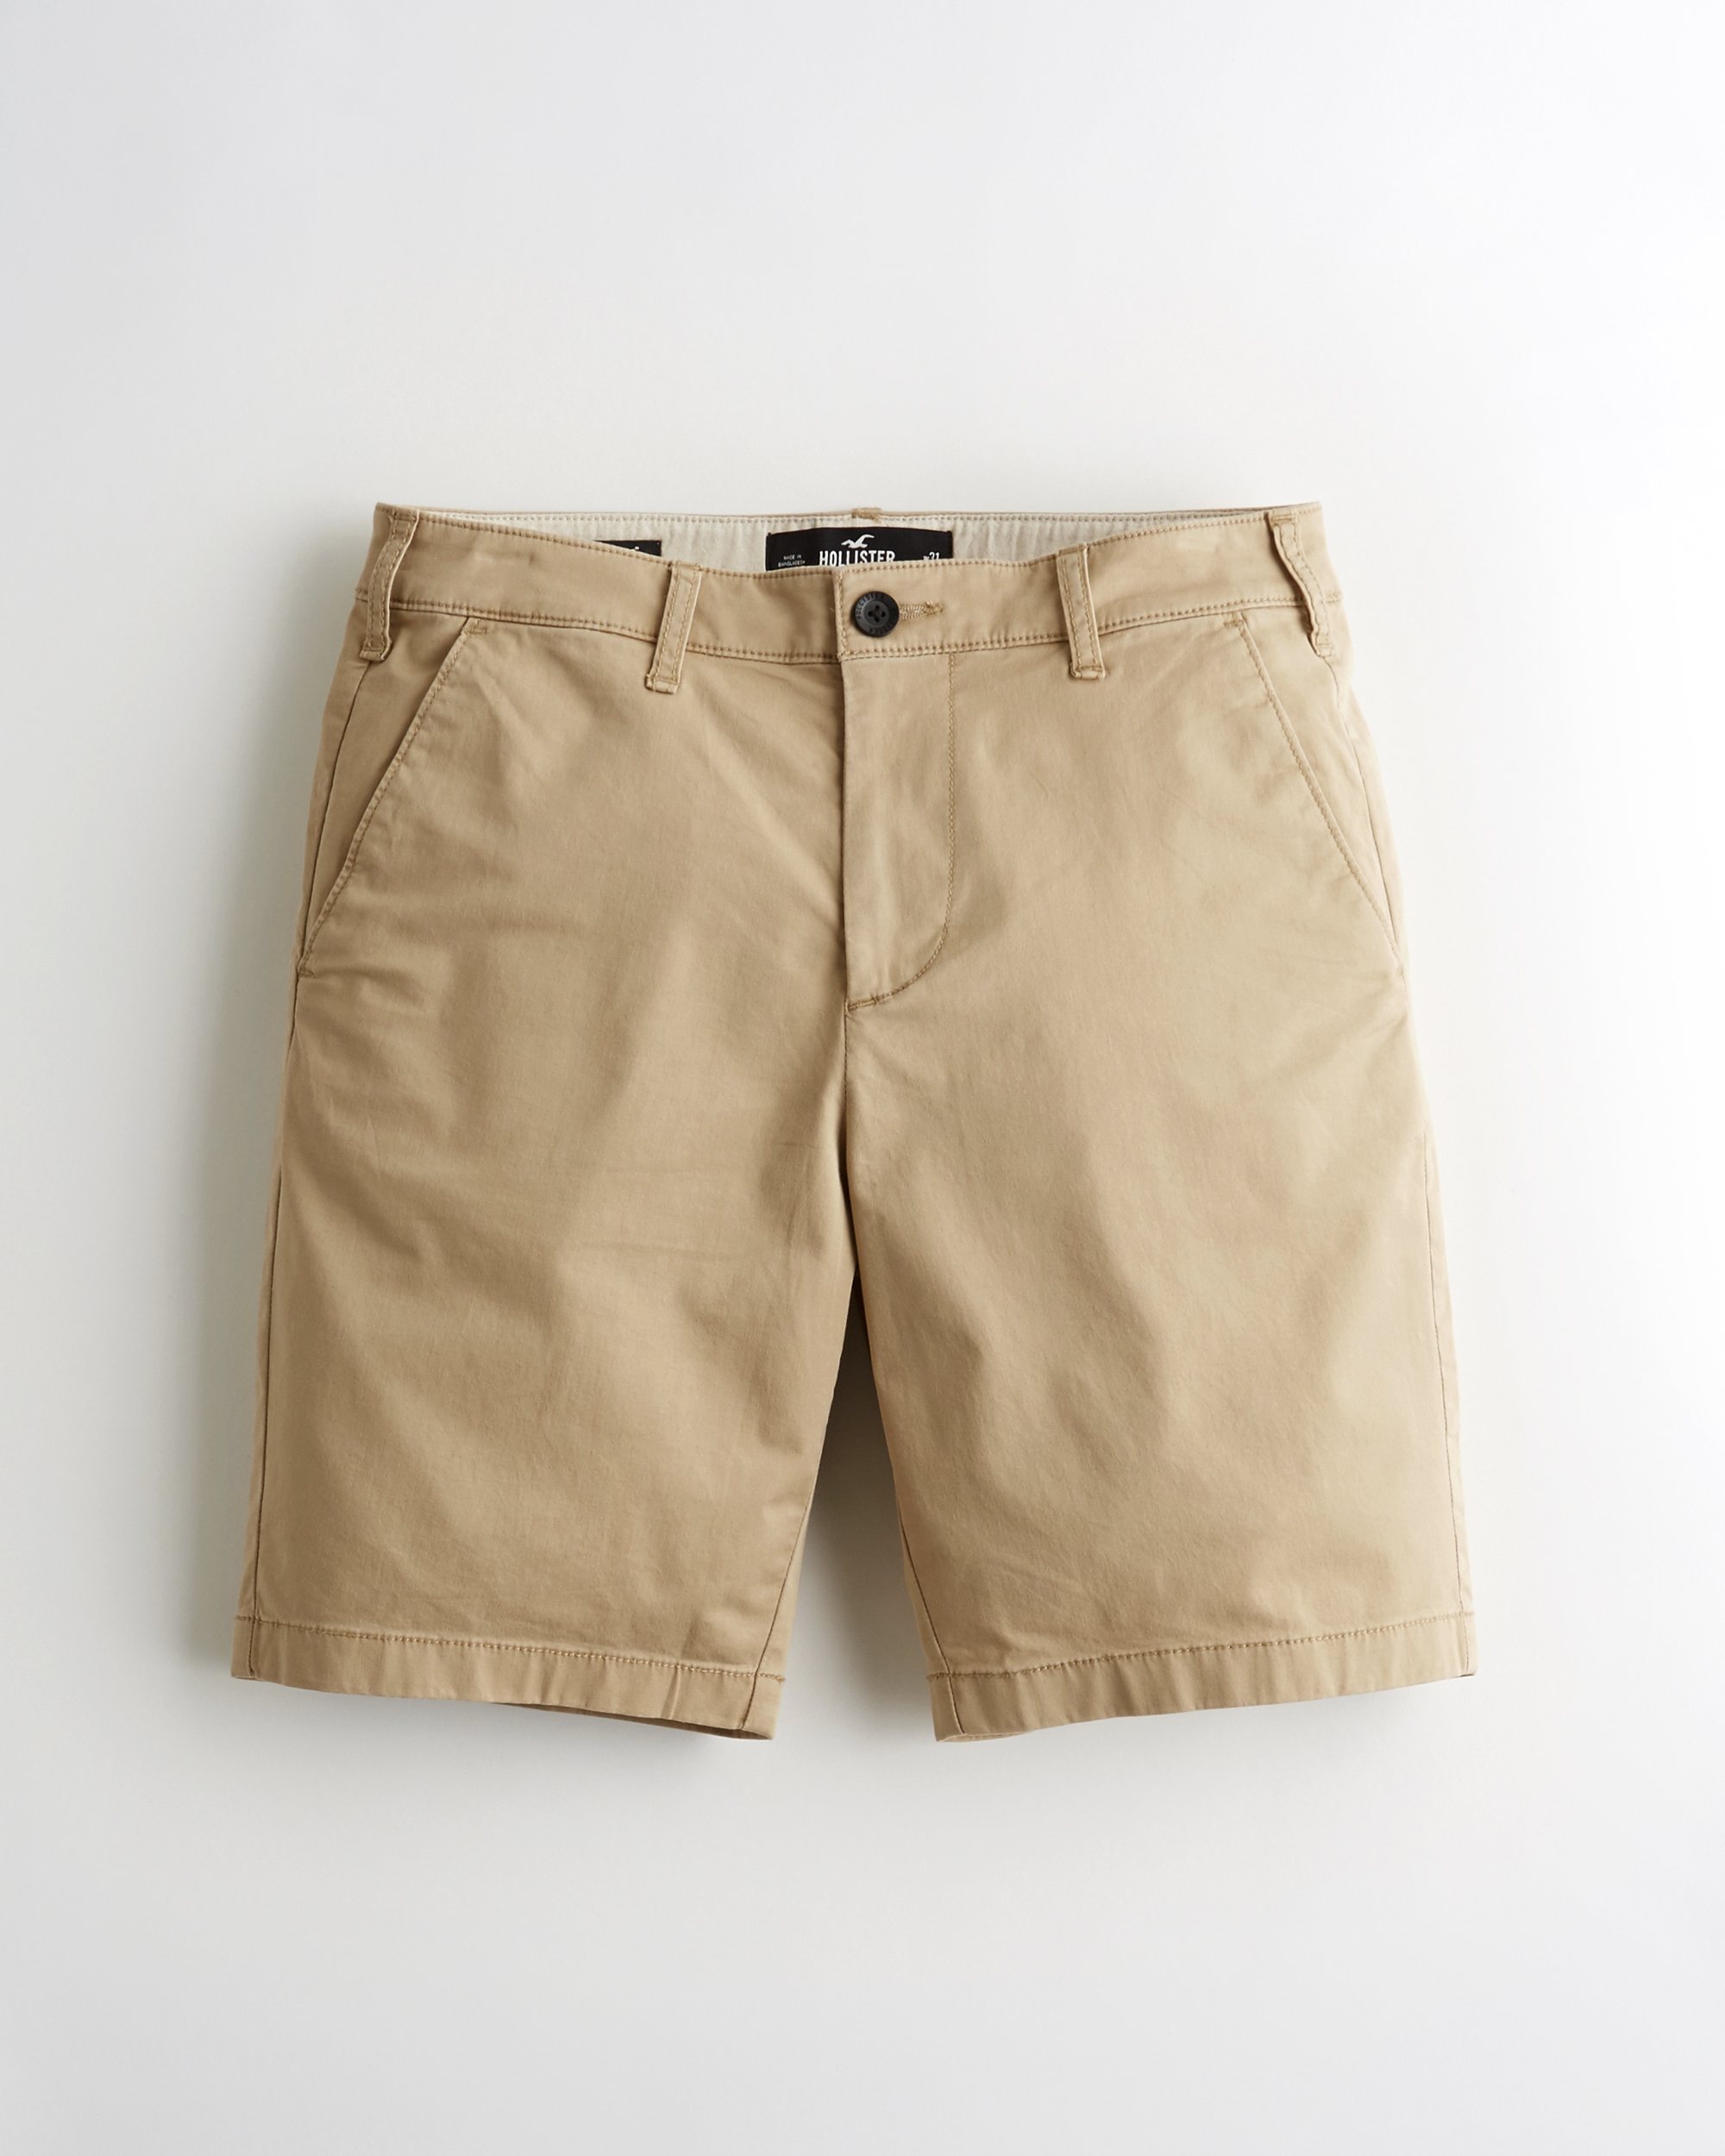 hollister uniform shorts